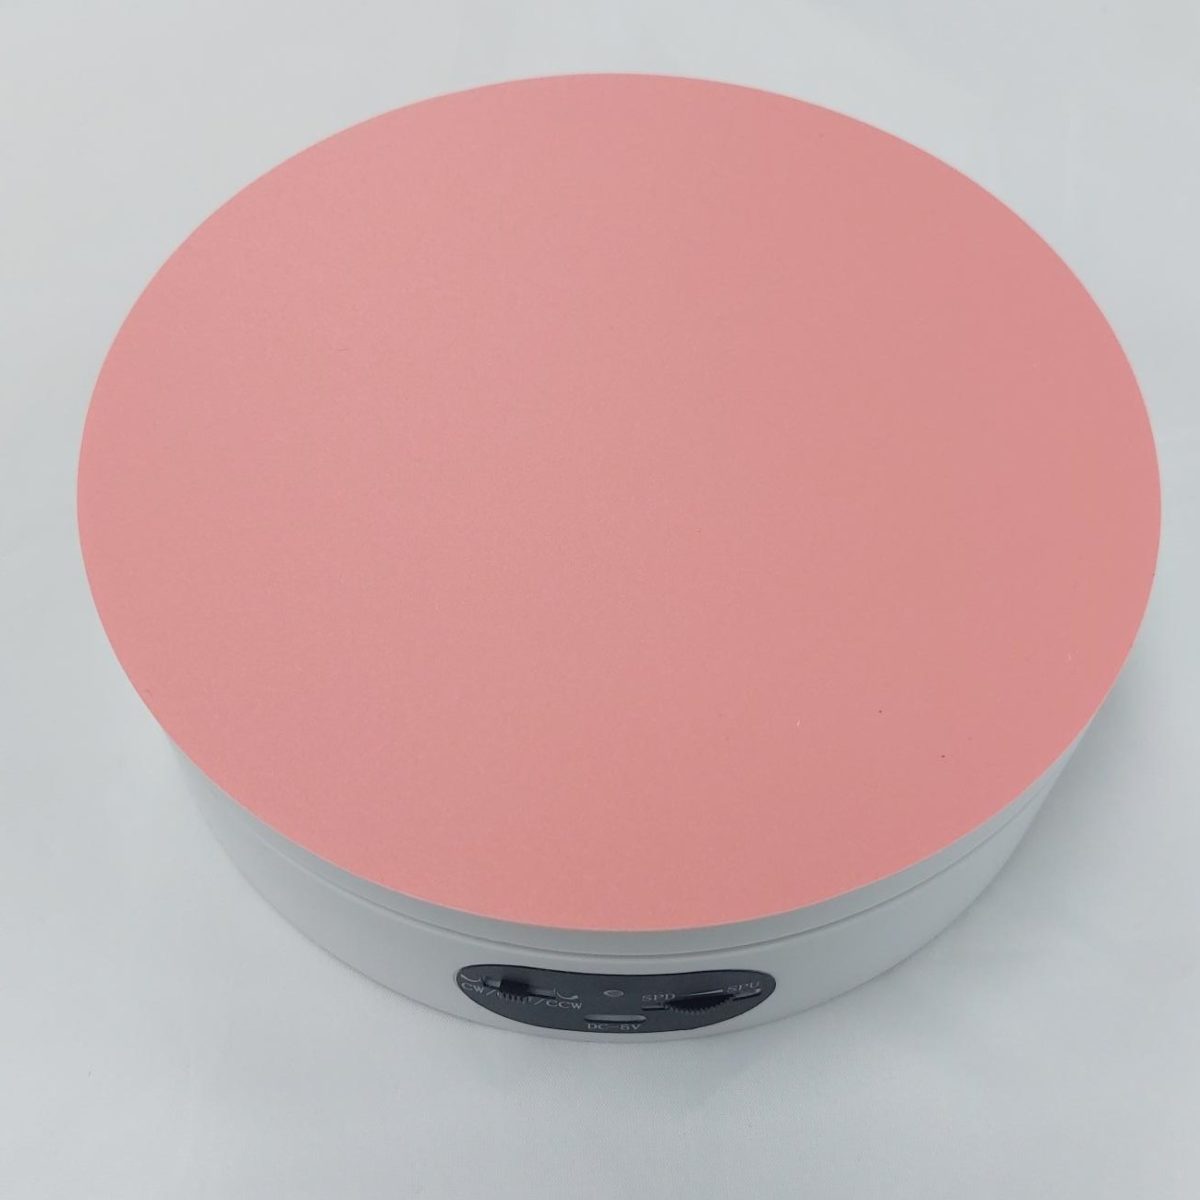 285535 Motorised Turntable White 16cm Pink Top